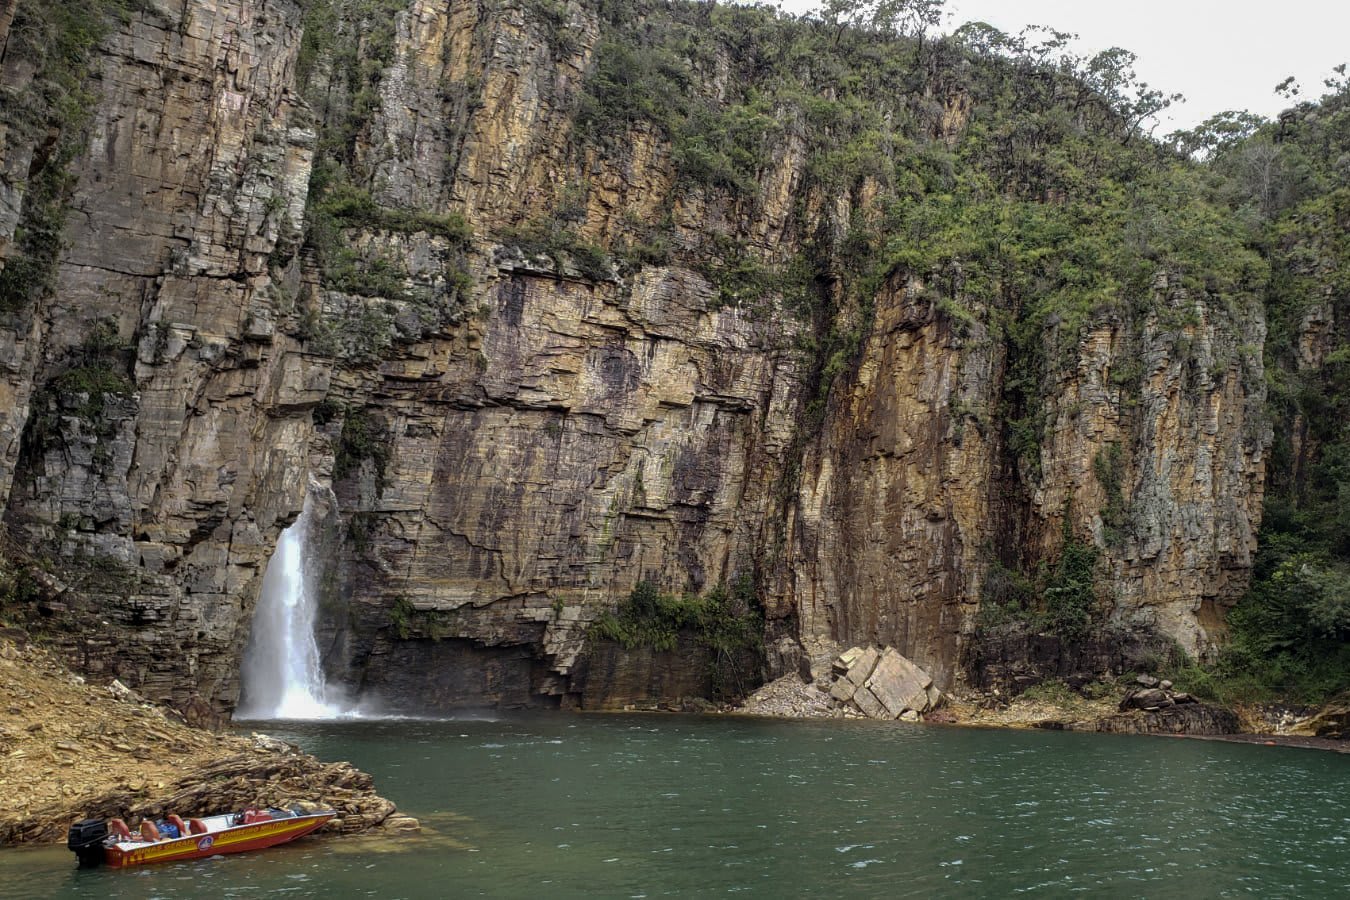 Wall of rock falls on boaters on Brazilian lake killing least 6, injuring 32